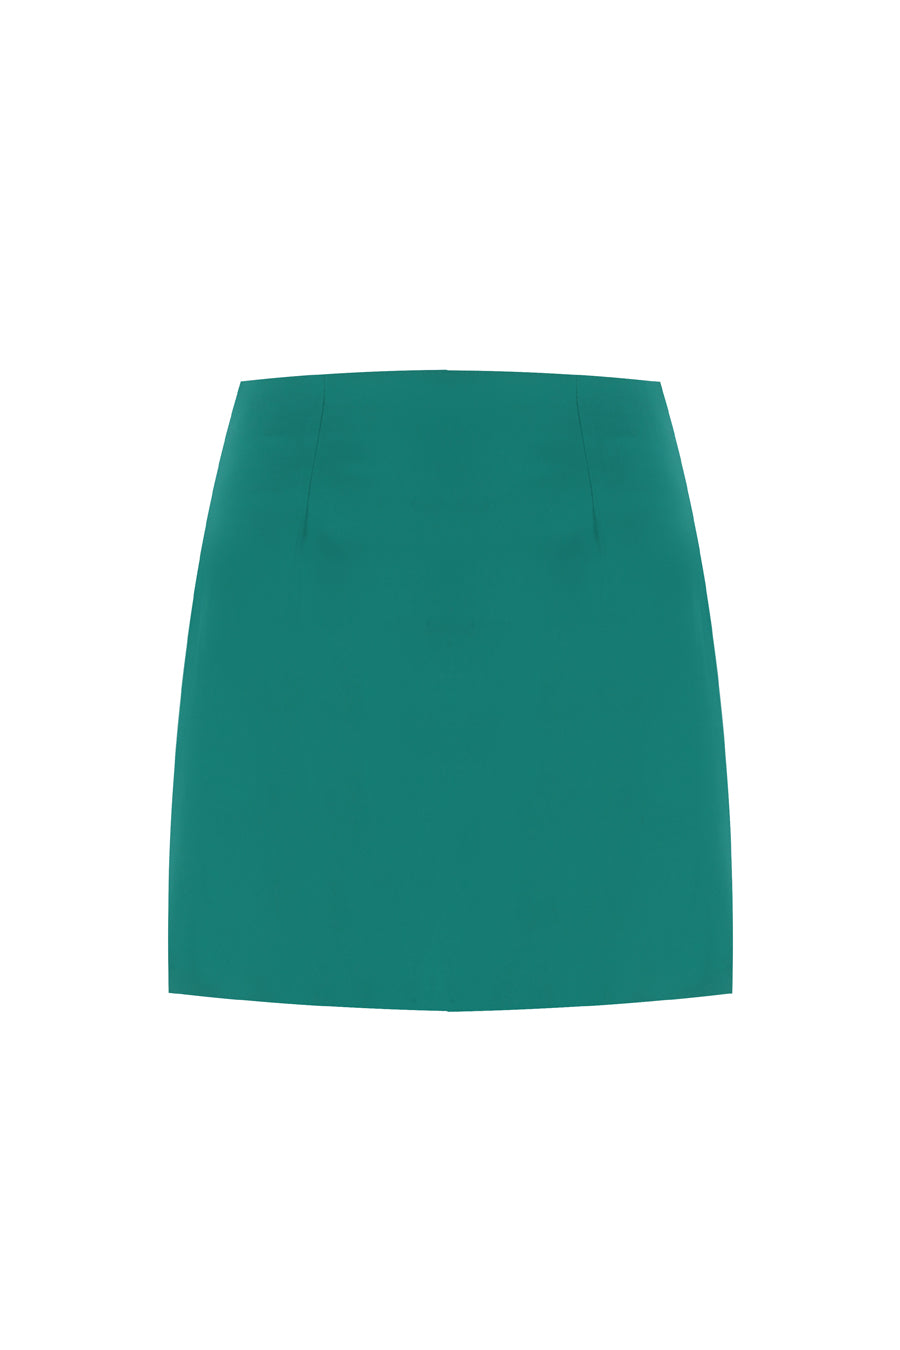 Court Mid-Rise Emerald Green Skirt